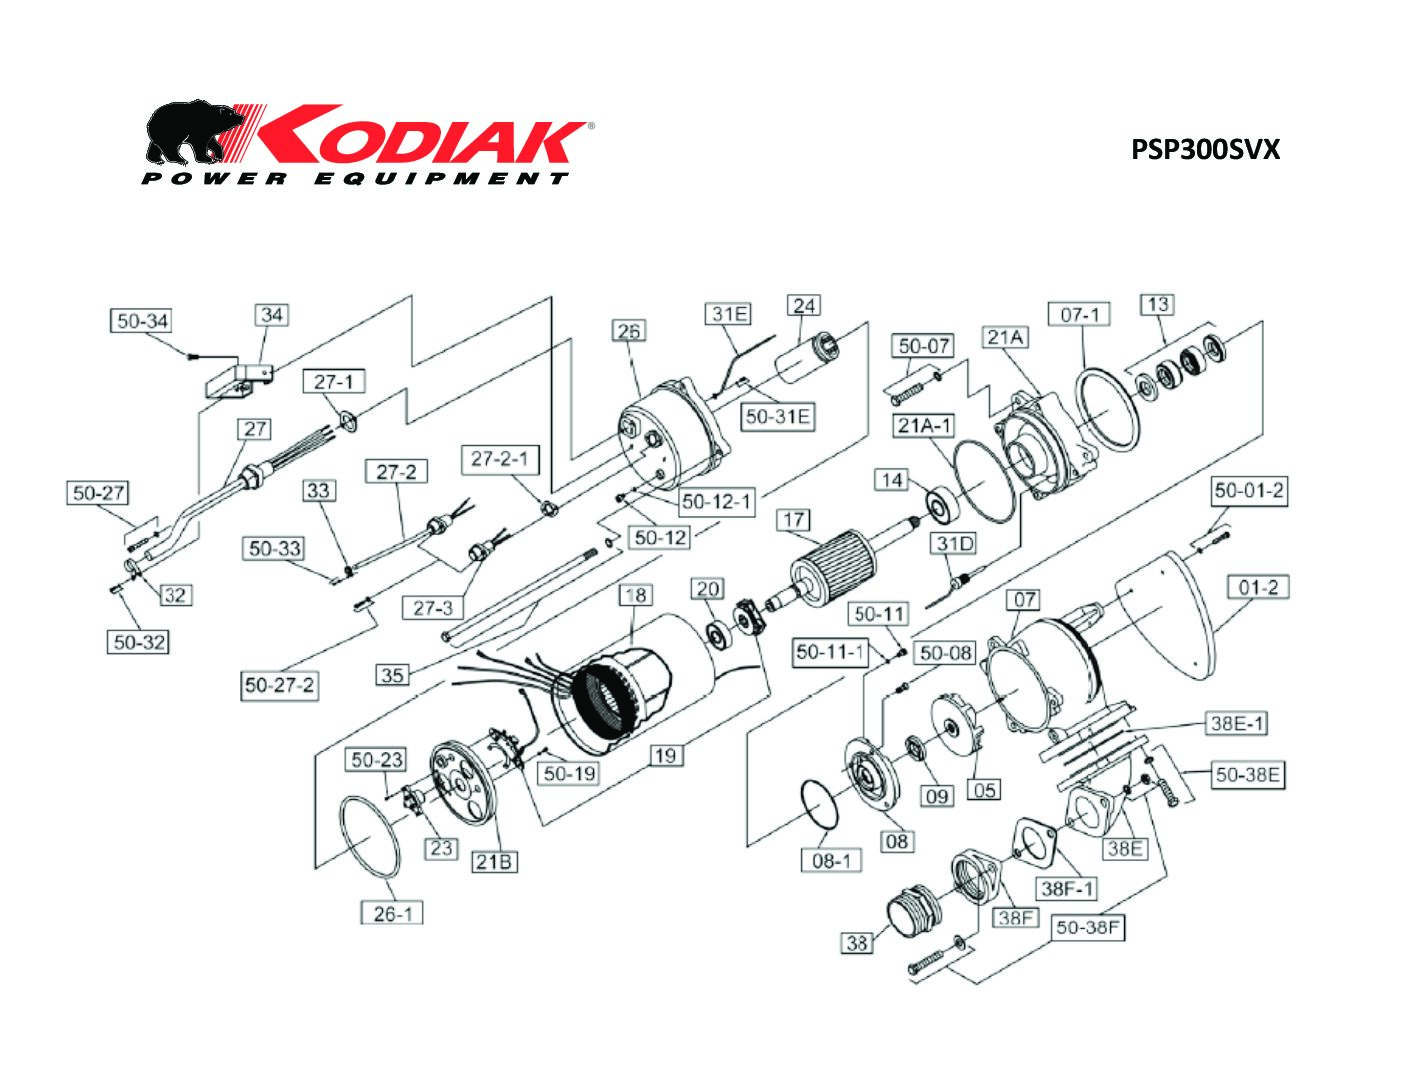 Kodiak PSP300SVX Parts